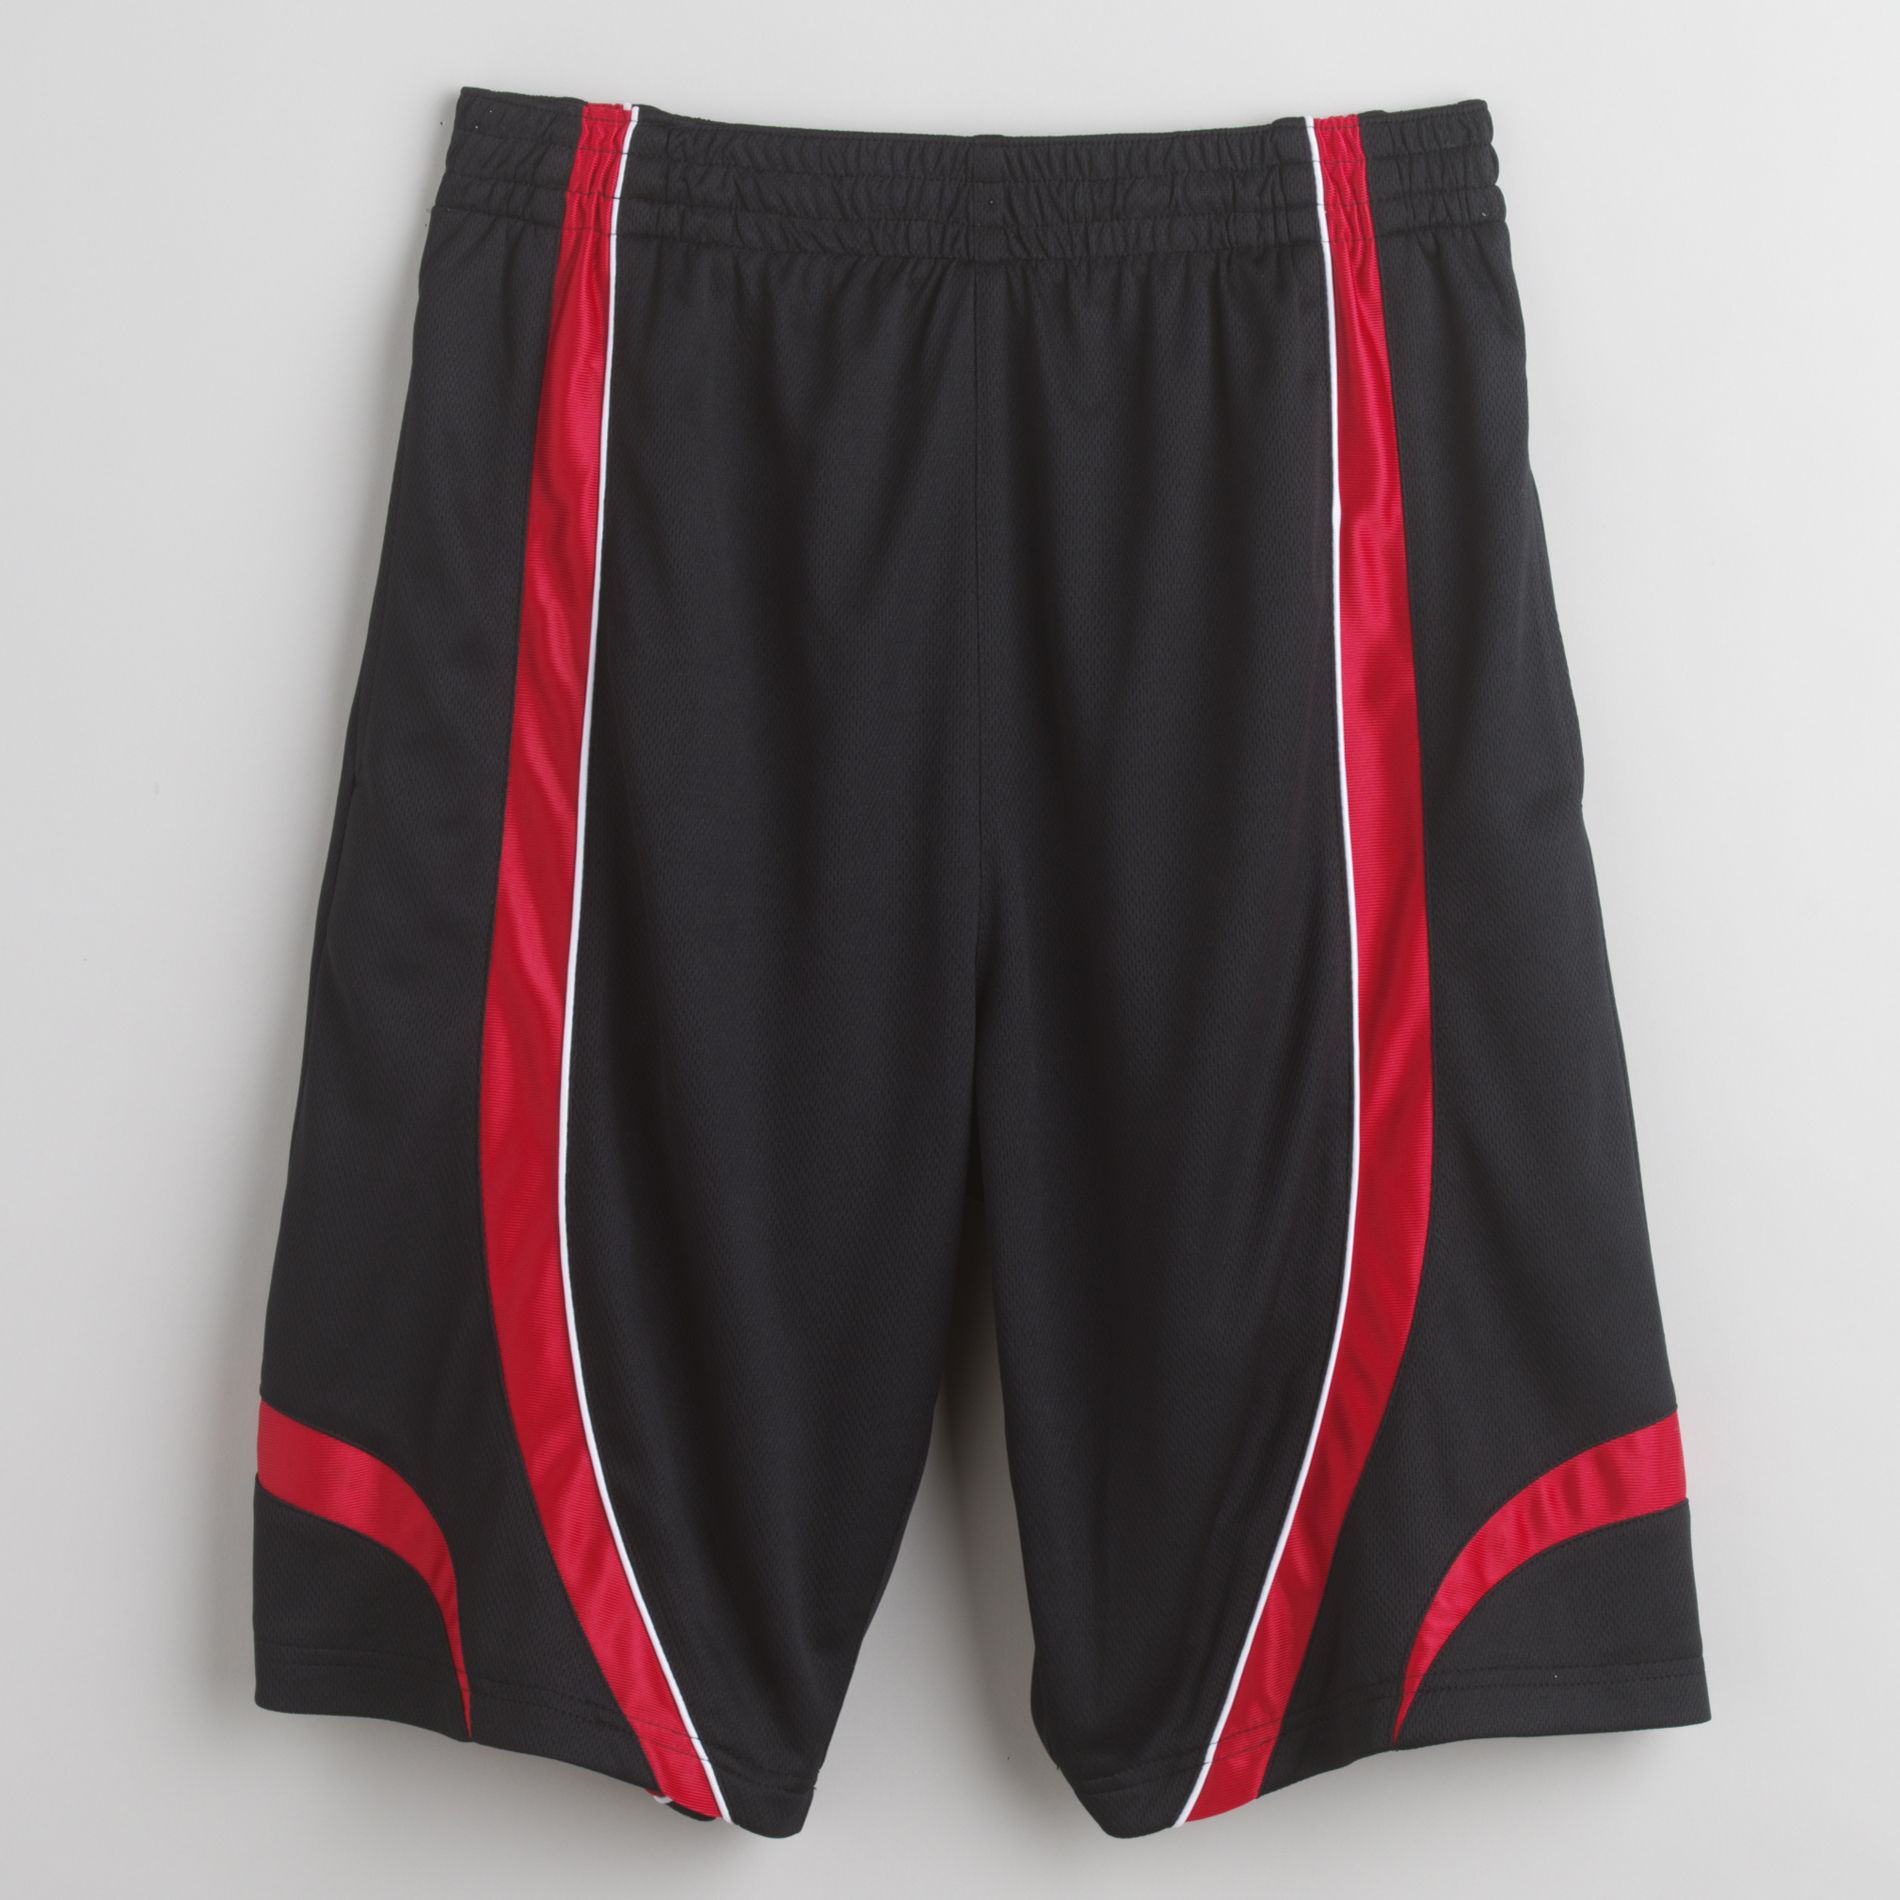 Athletech Men's Side Stripe Mesh Basketball Eagles Shorts